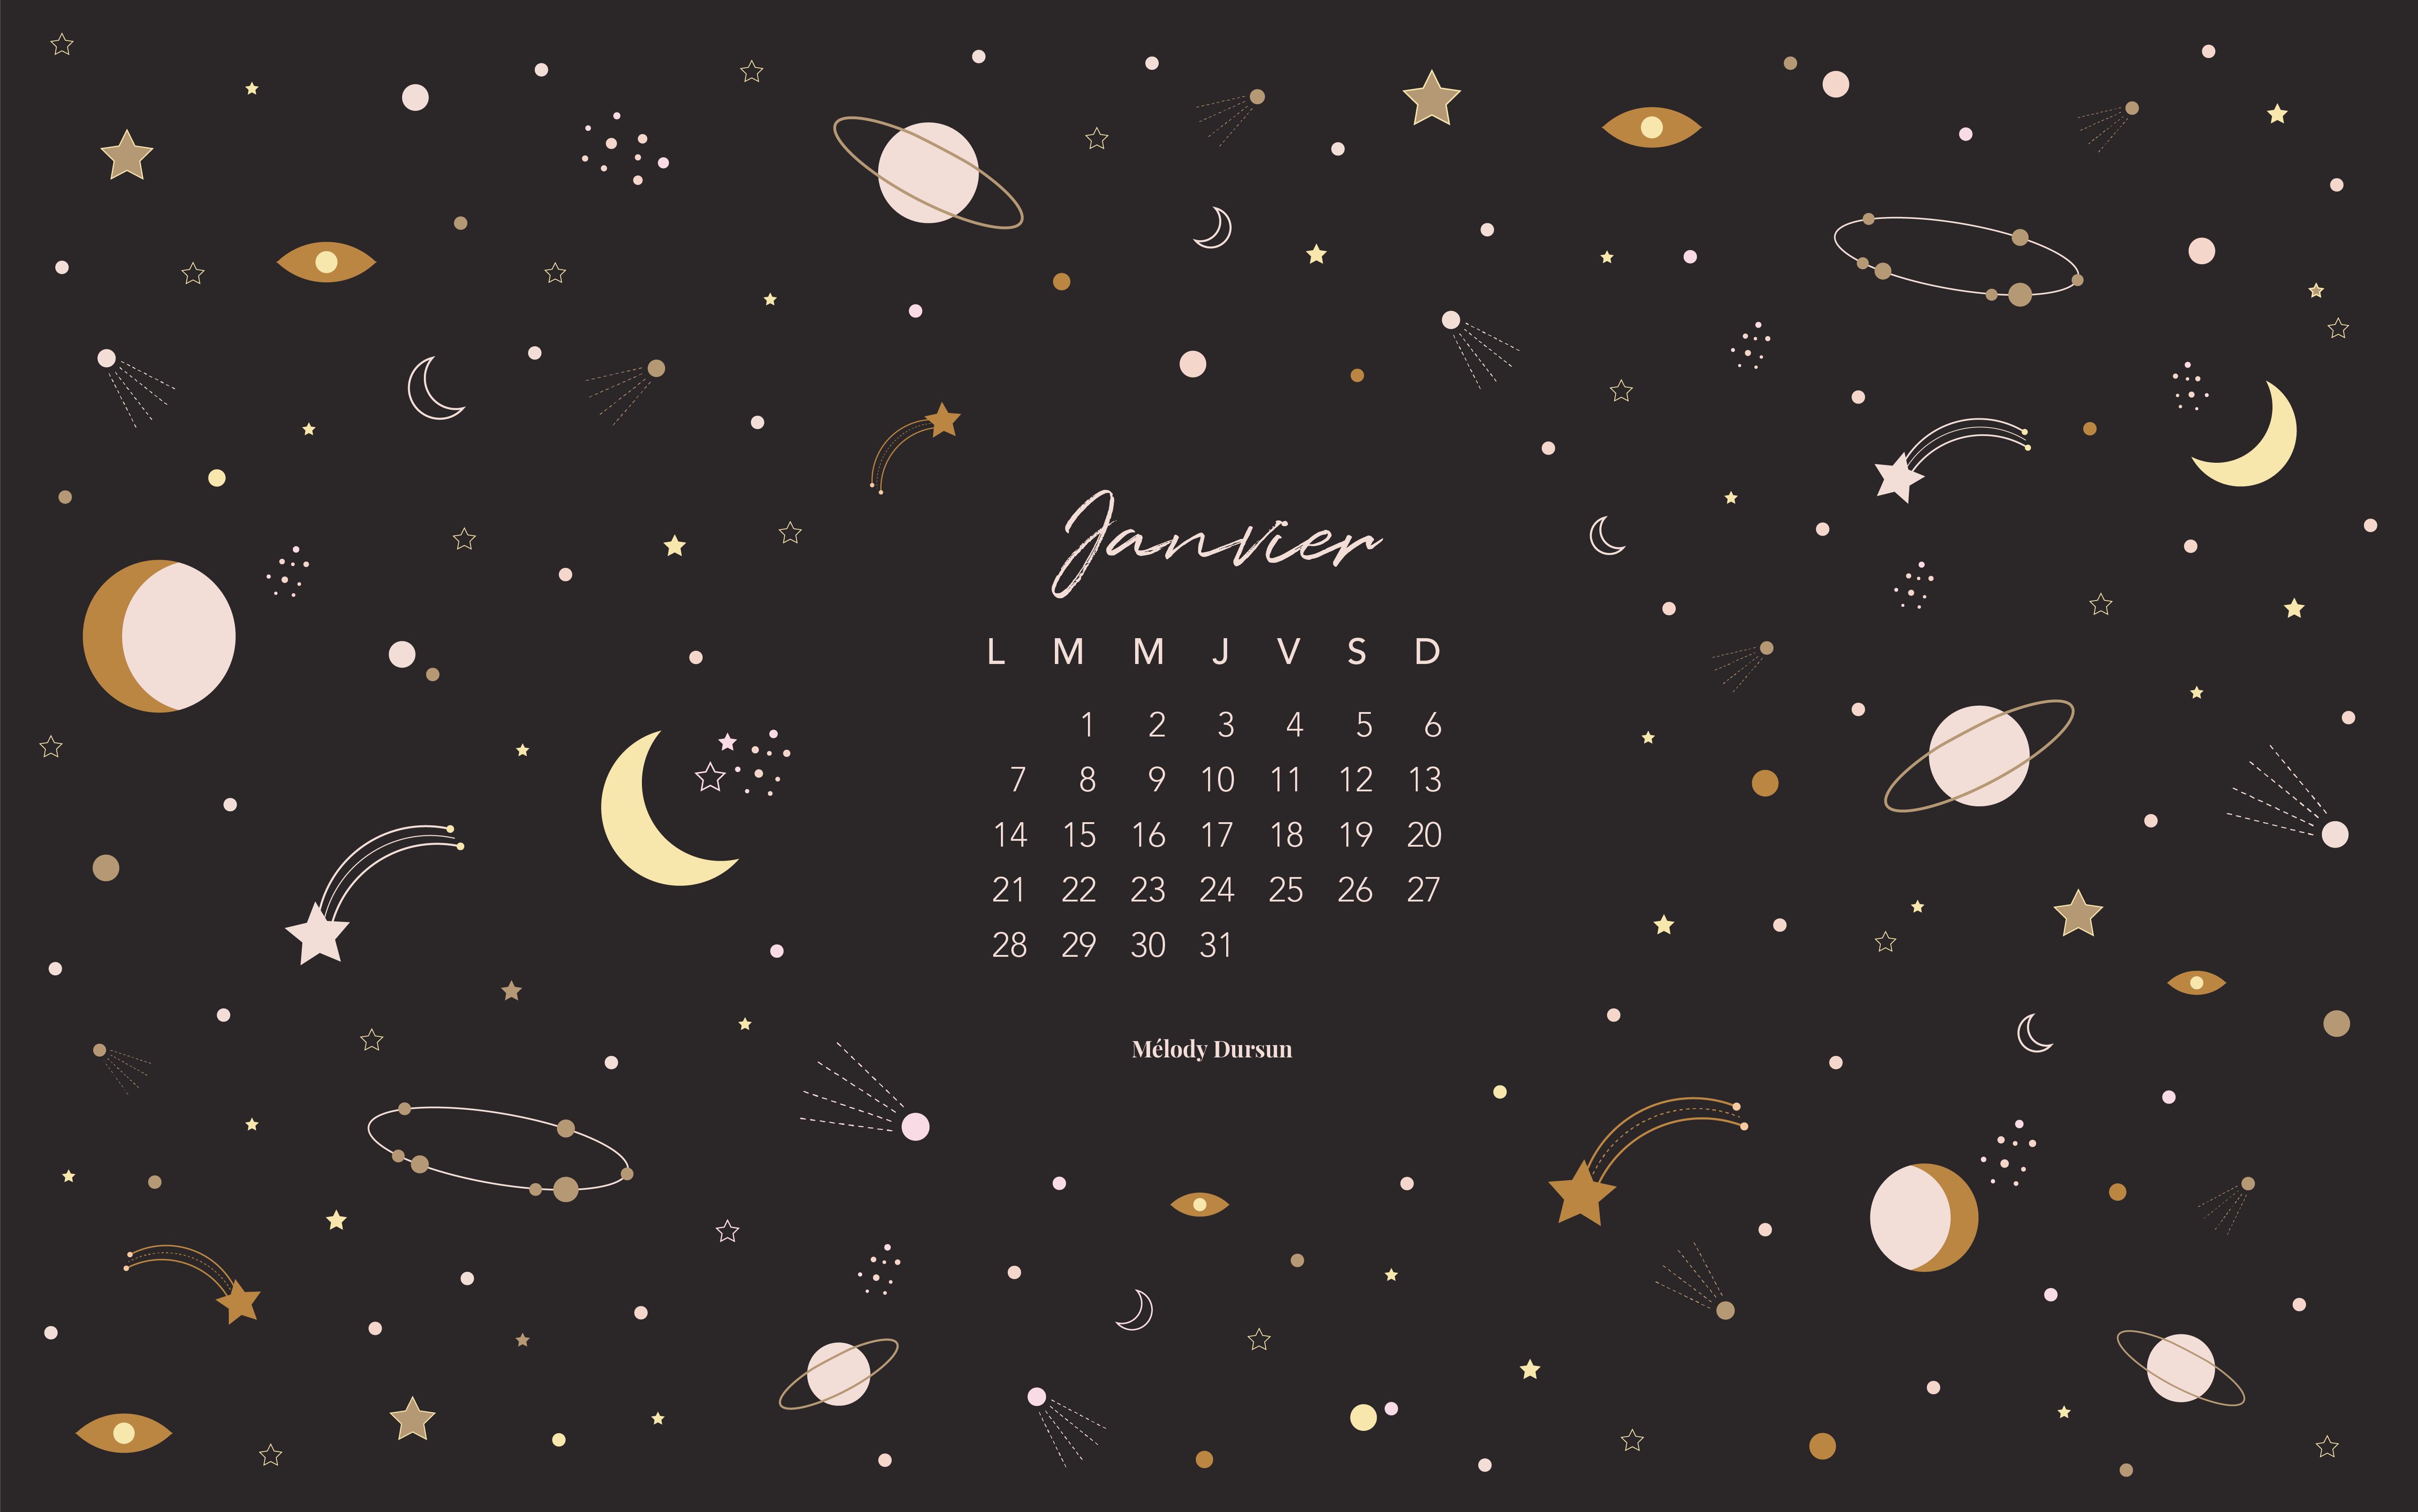 melodydursun-calendrier-janvier2019-black-1